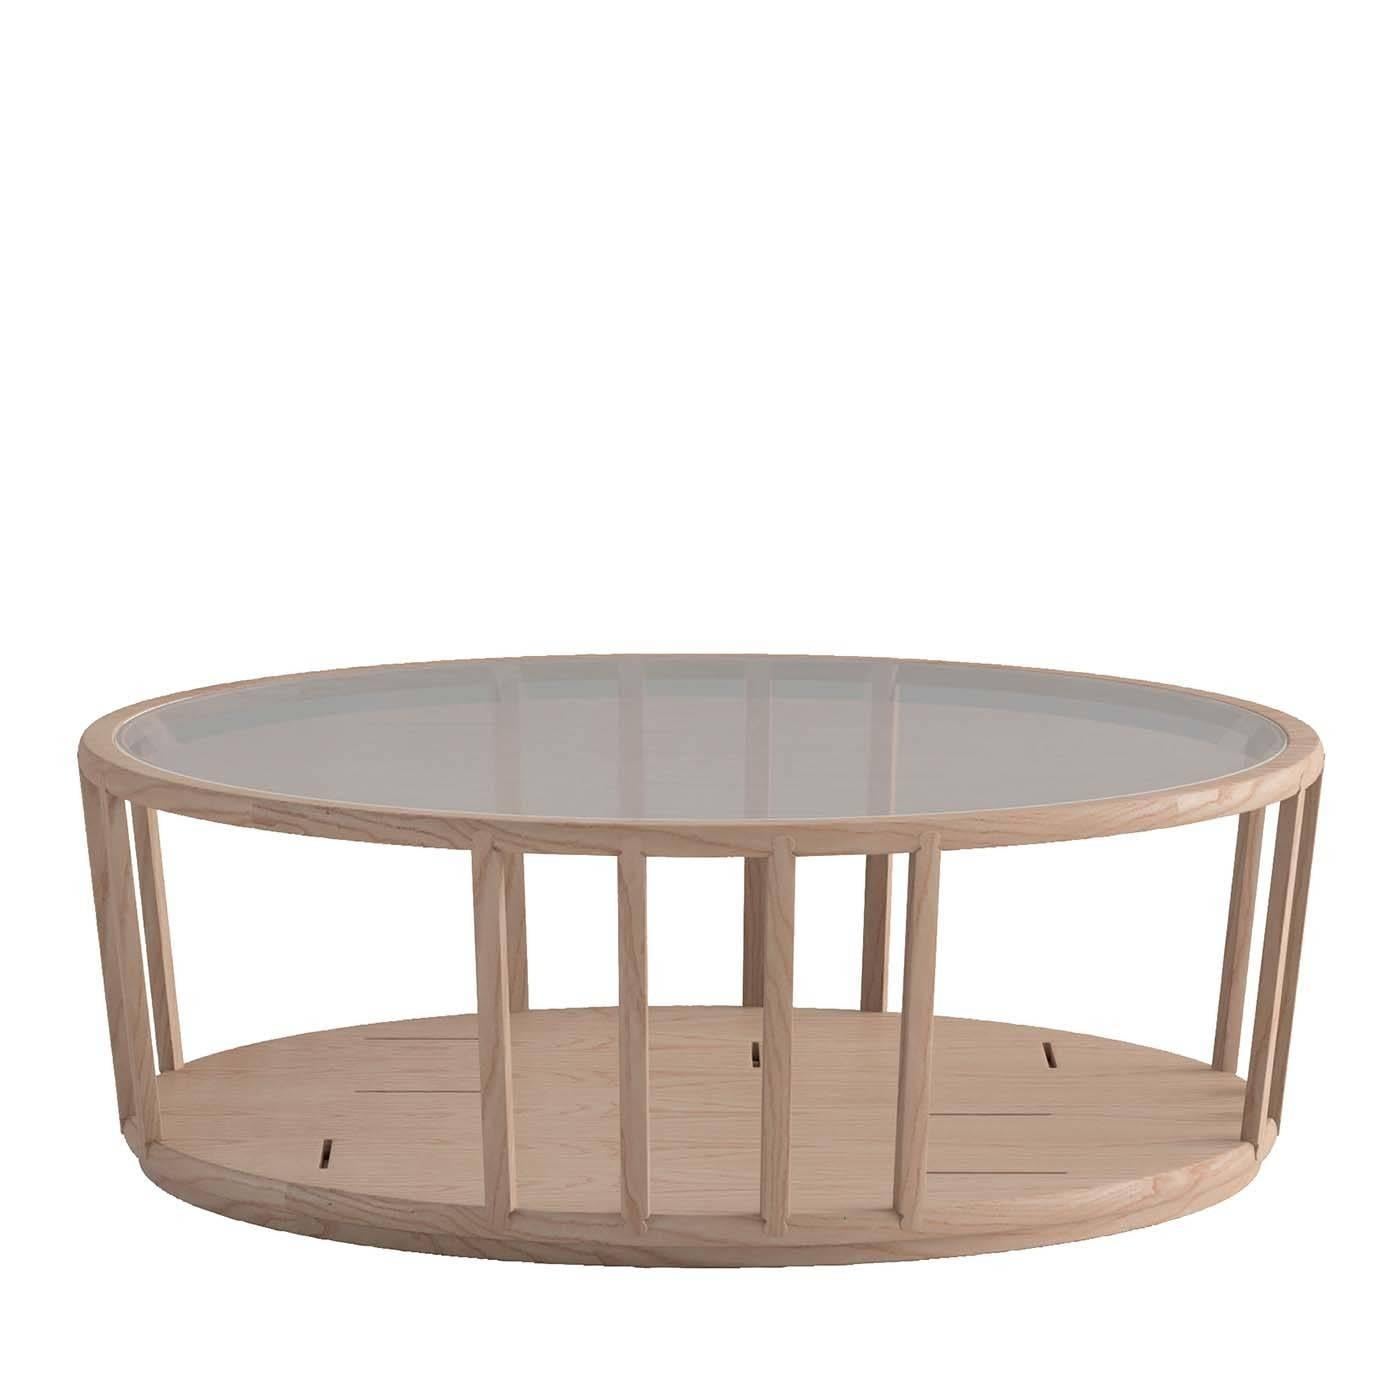 Dedalo Oval Coffee Table